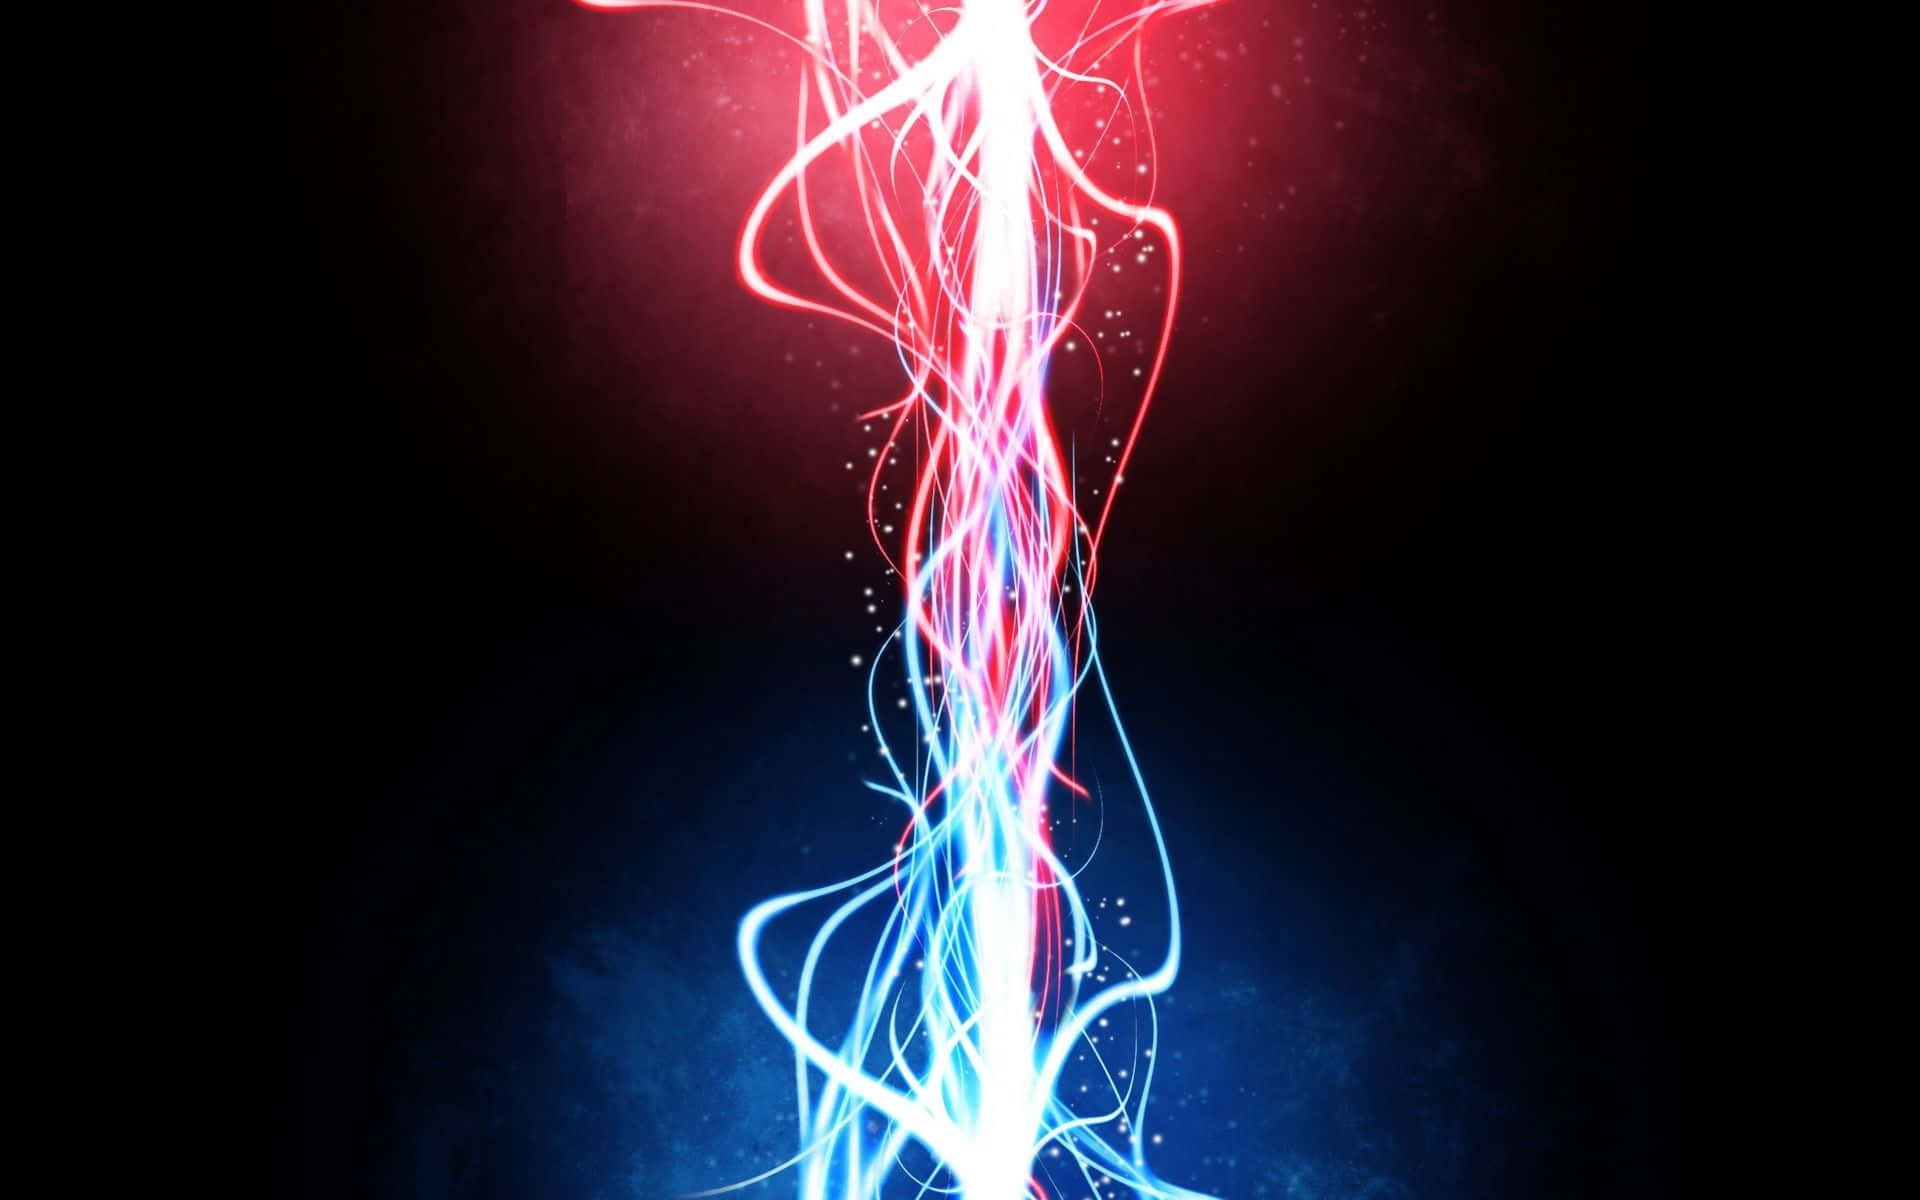 Abstract Energy Plasma Streams.jpg Wallpaper